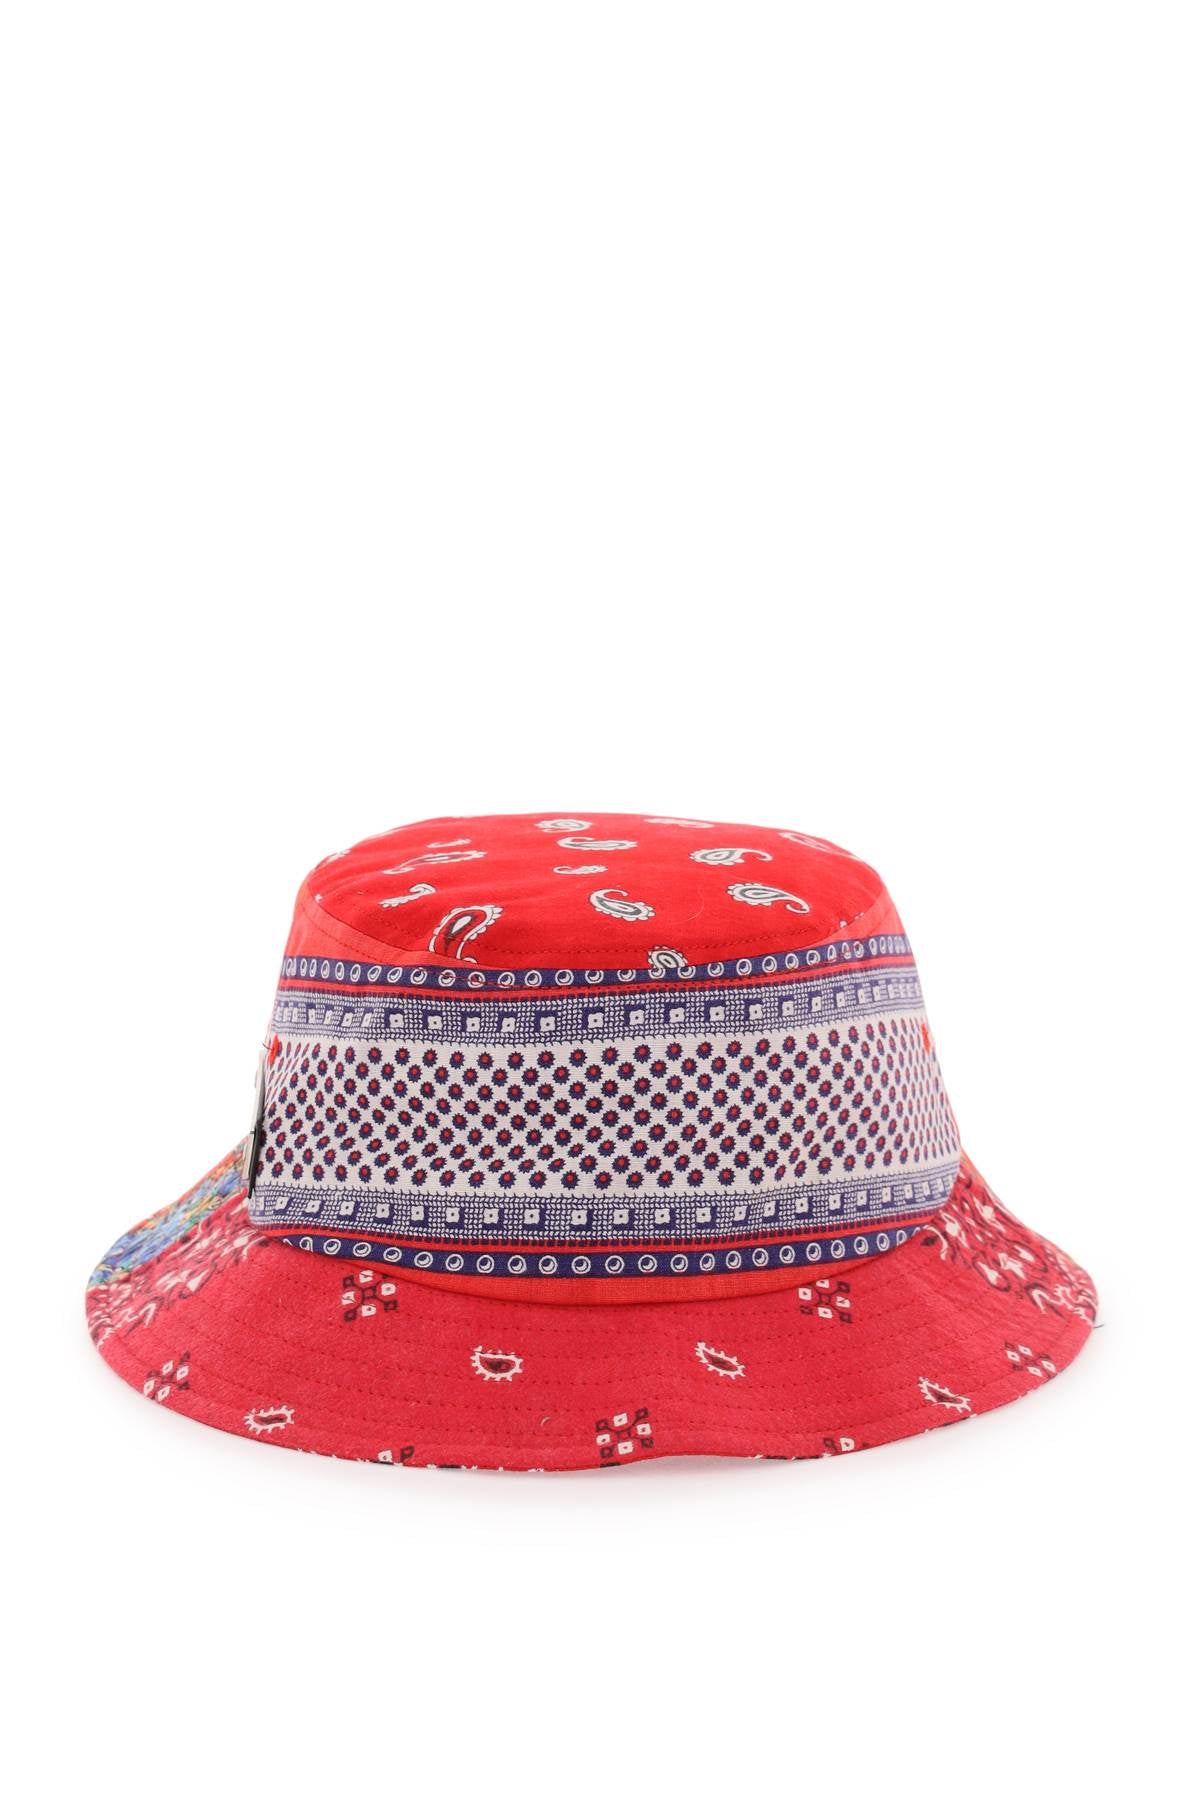 Children Of The Discordance Bandana Bucket Hat   Red